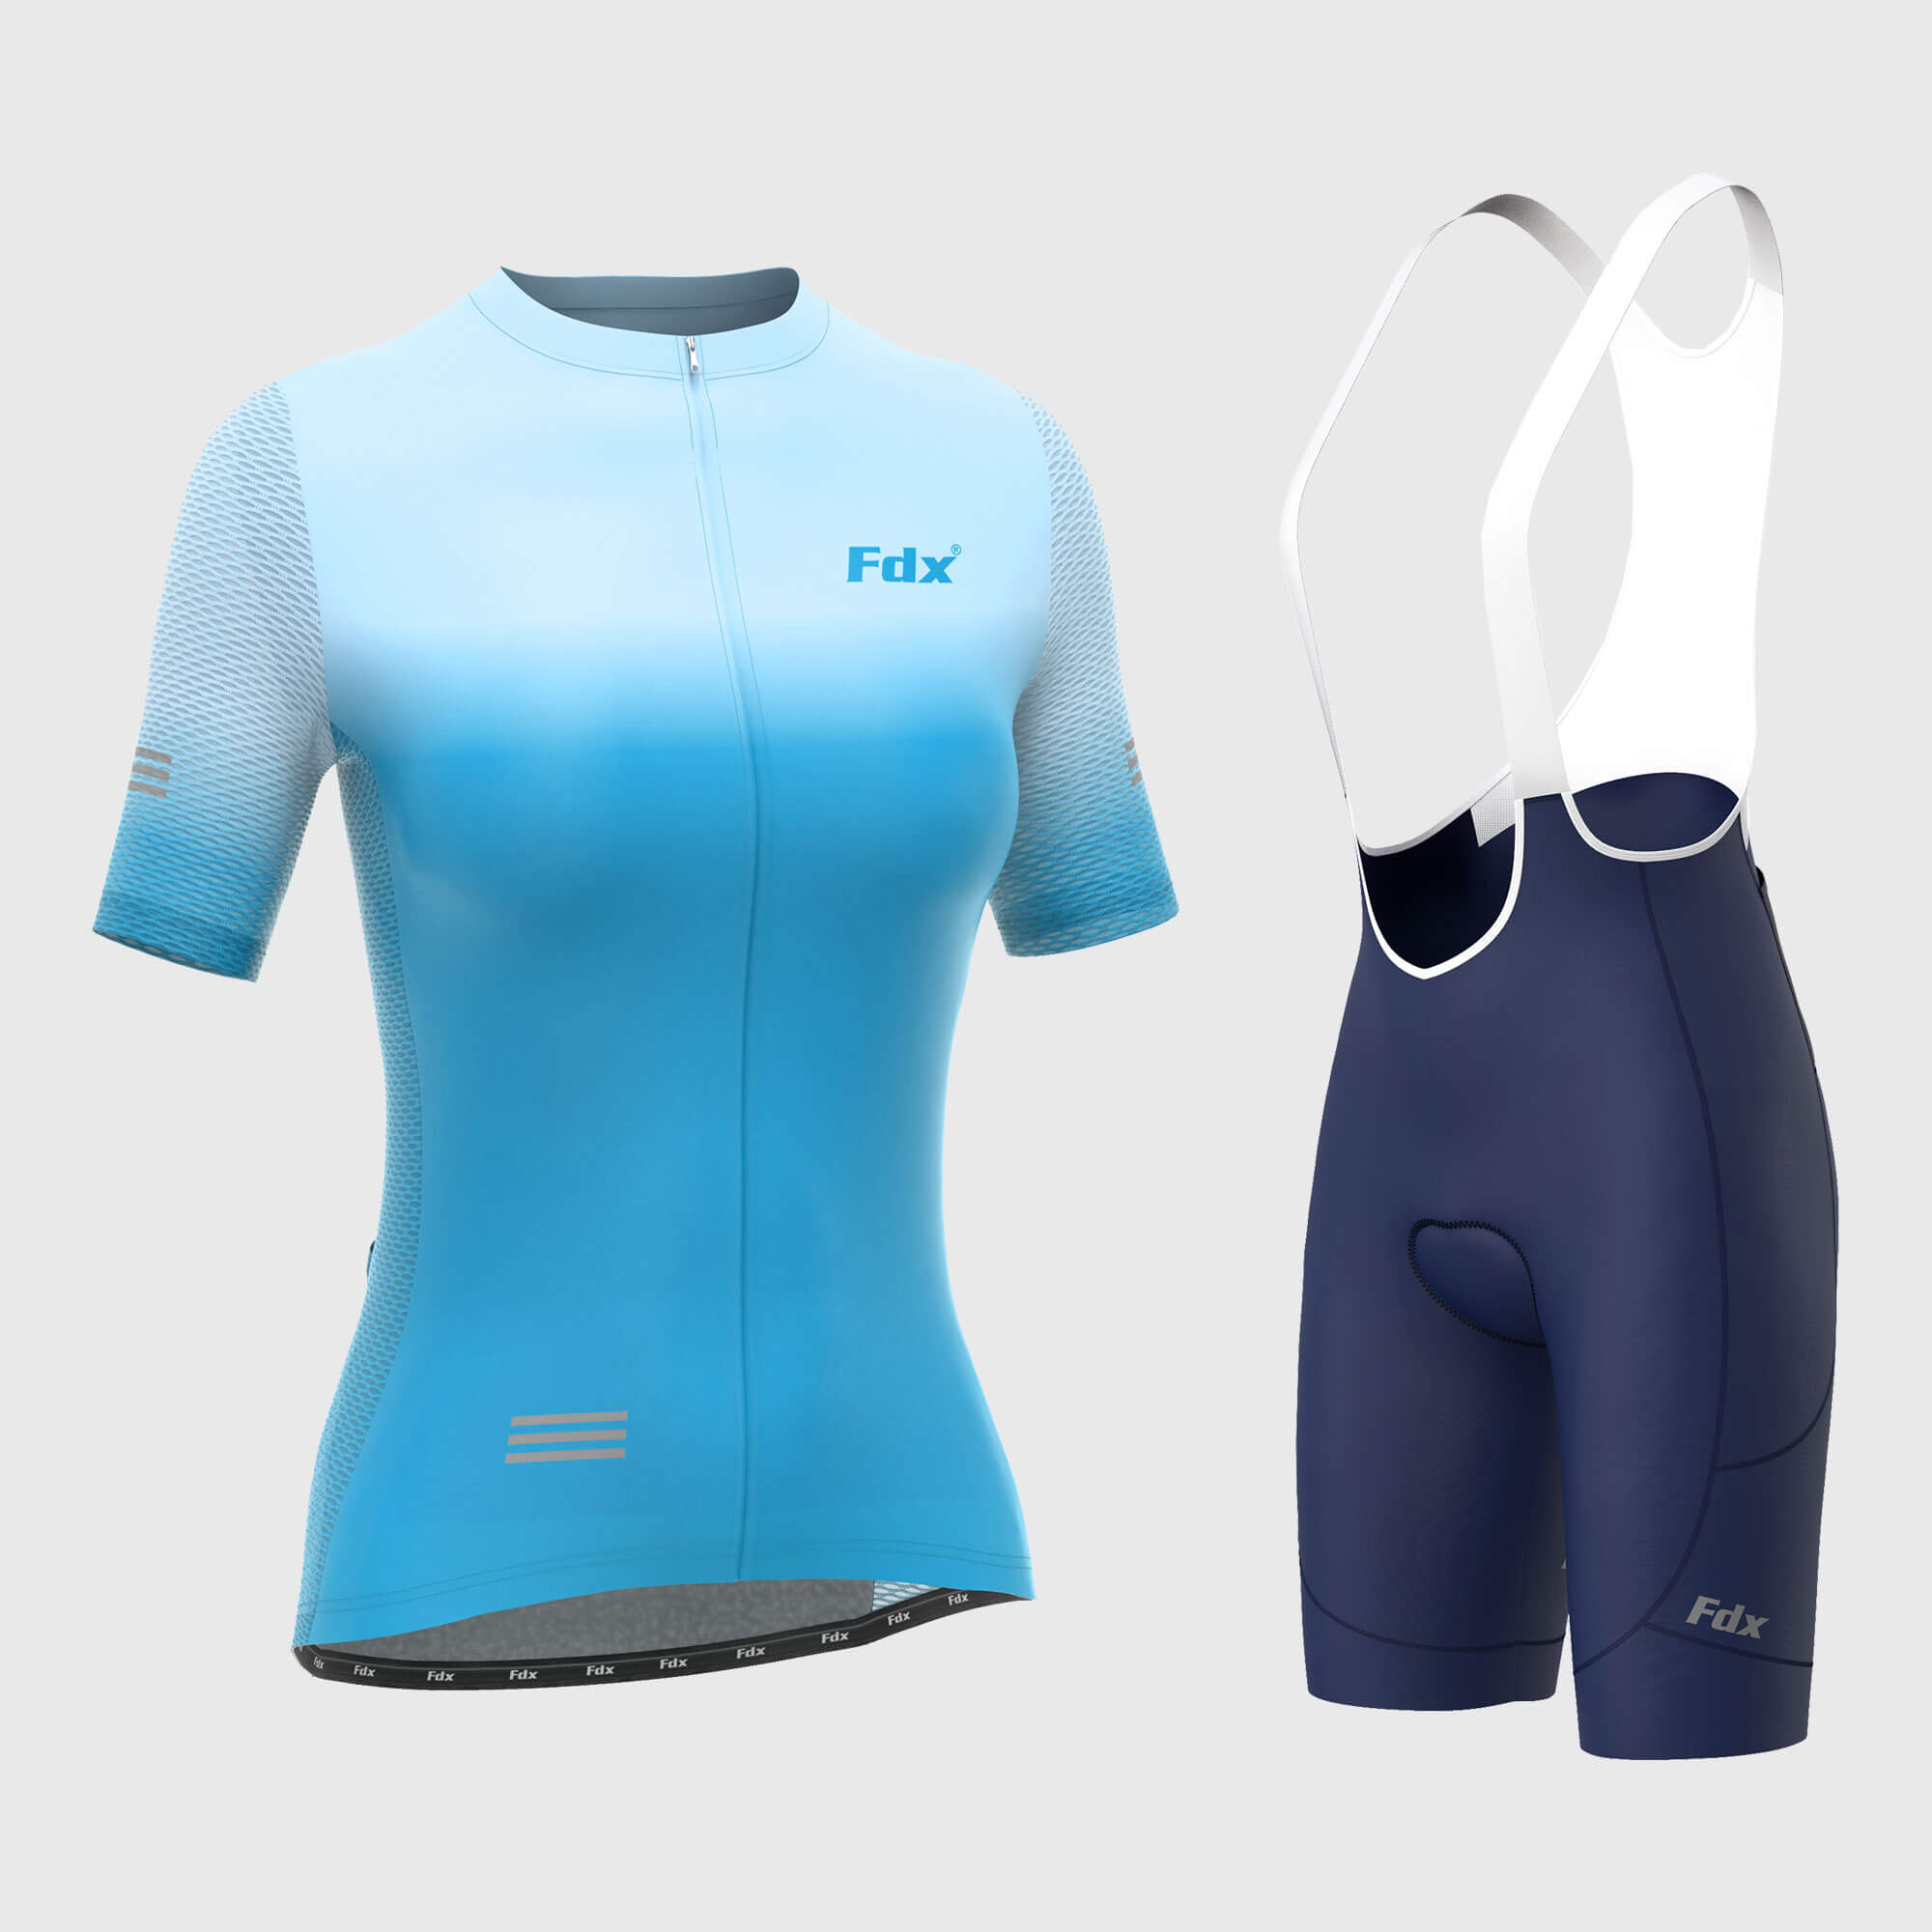 Fdx Women's Blue Short Sleeve Cycling Jersey & Gel Padded Bib Shorts Best Summer Road Bike Wear Light Weight, Hi-viz Reflectors & Pockets - Duo